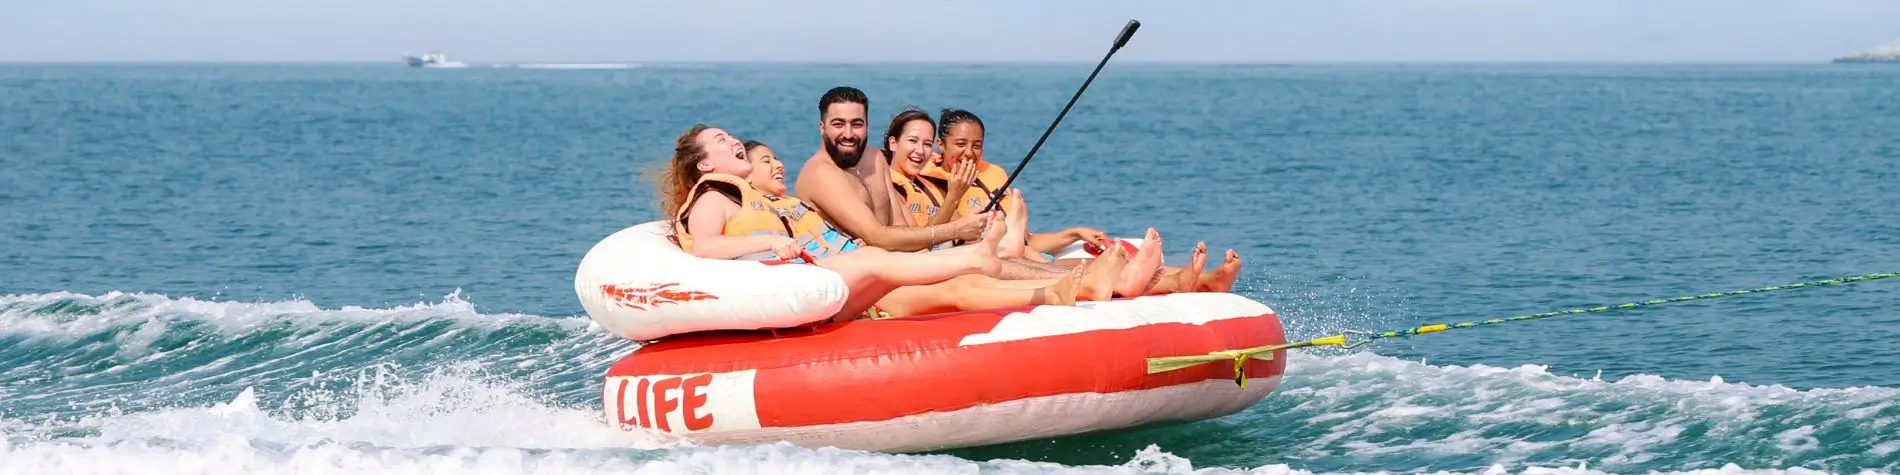 Donut Boat Ride in Dubai -Sea Life Watersports